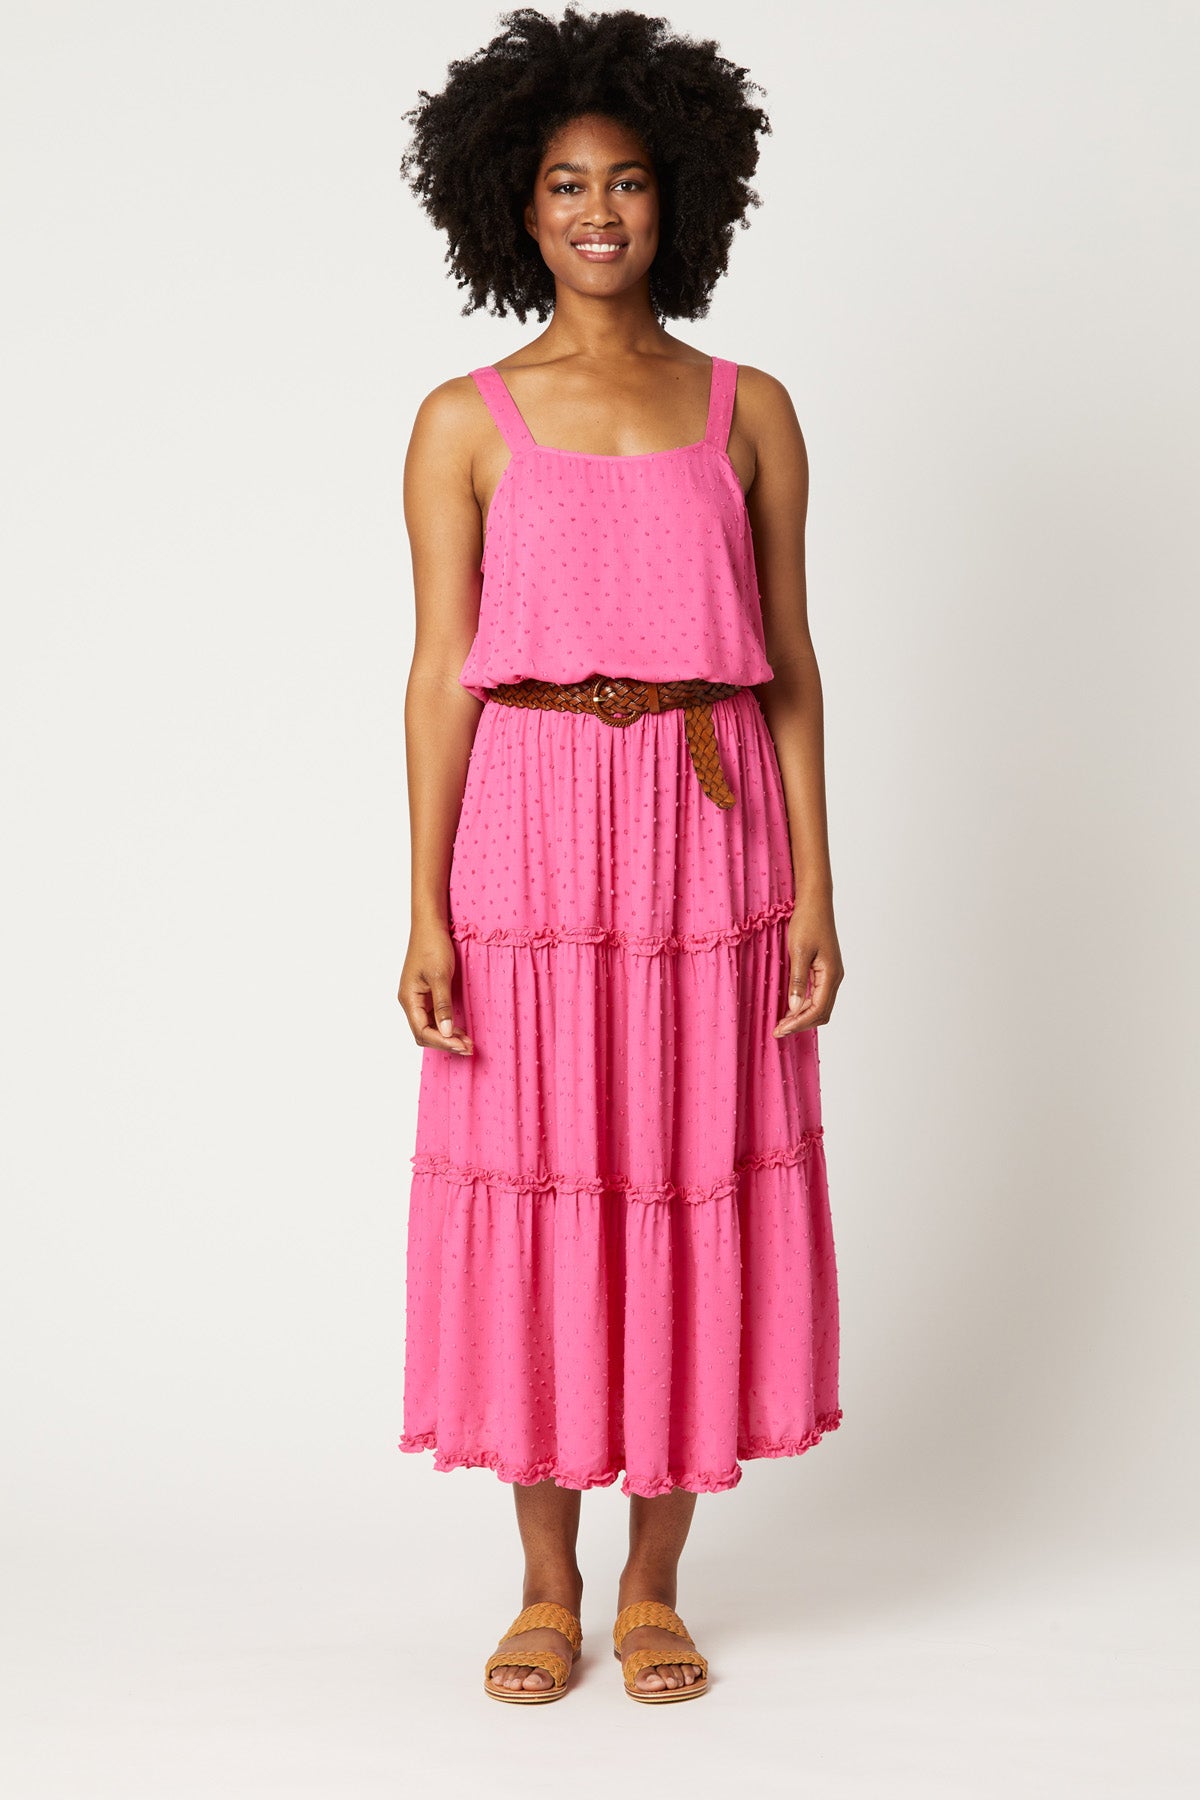 Jungle Maxi Skirt - Flamingo - eb&ive Clothing - Skirt Maxi